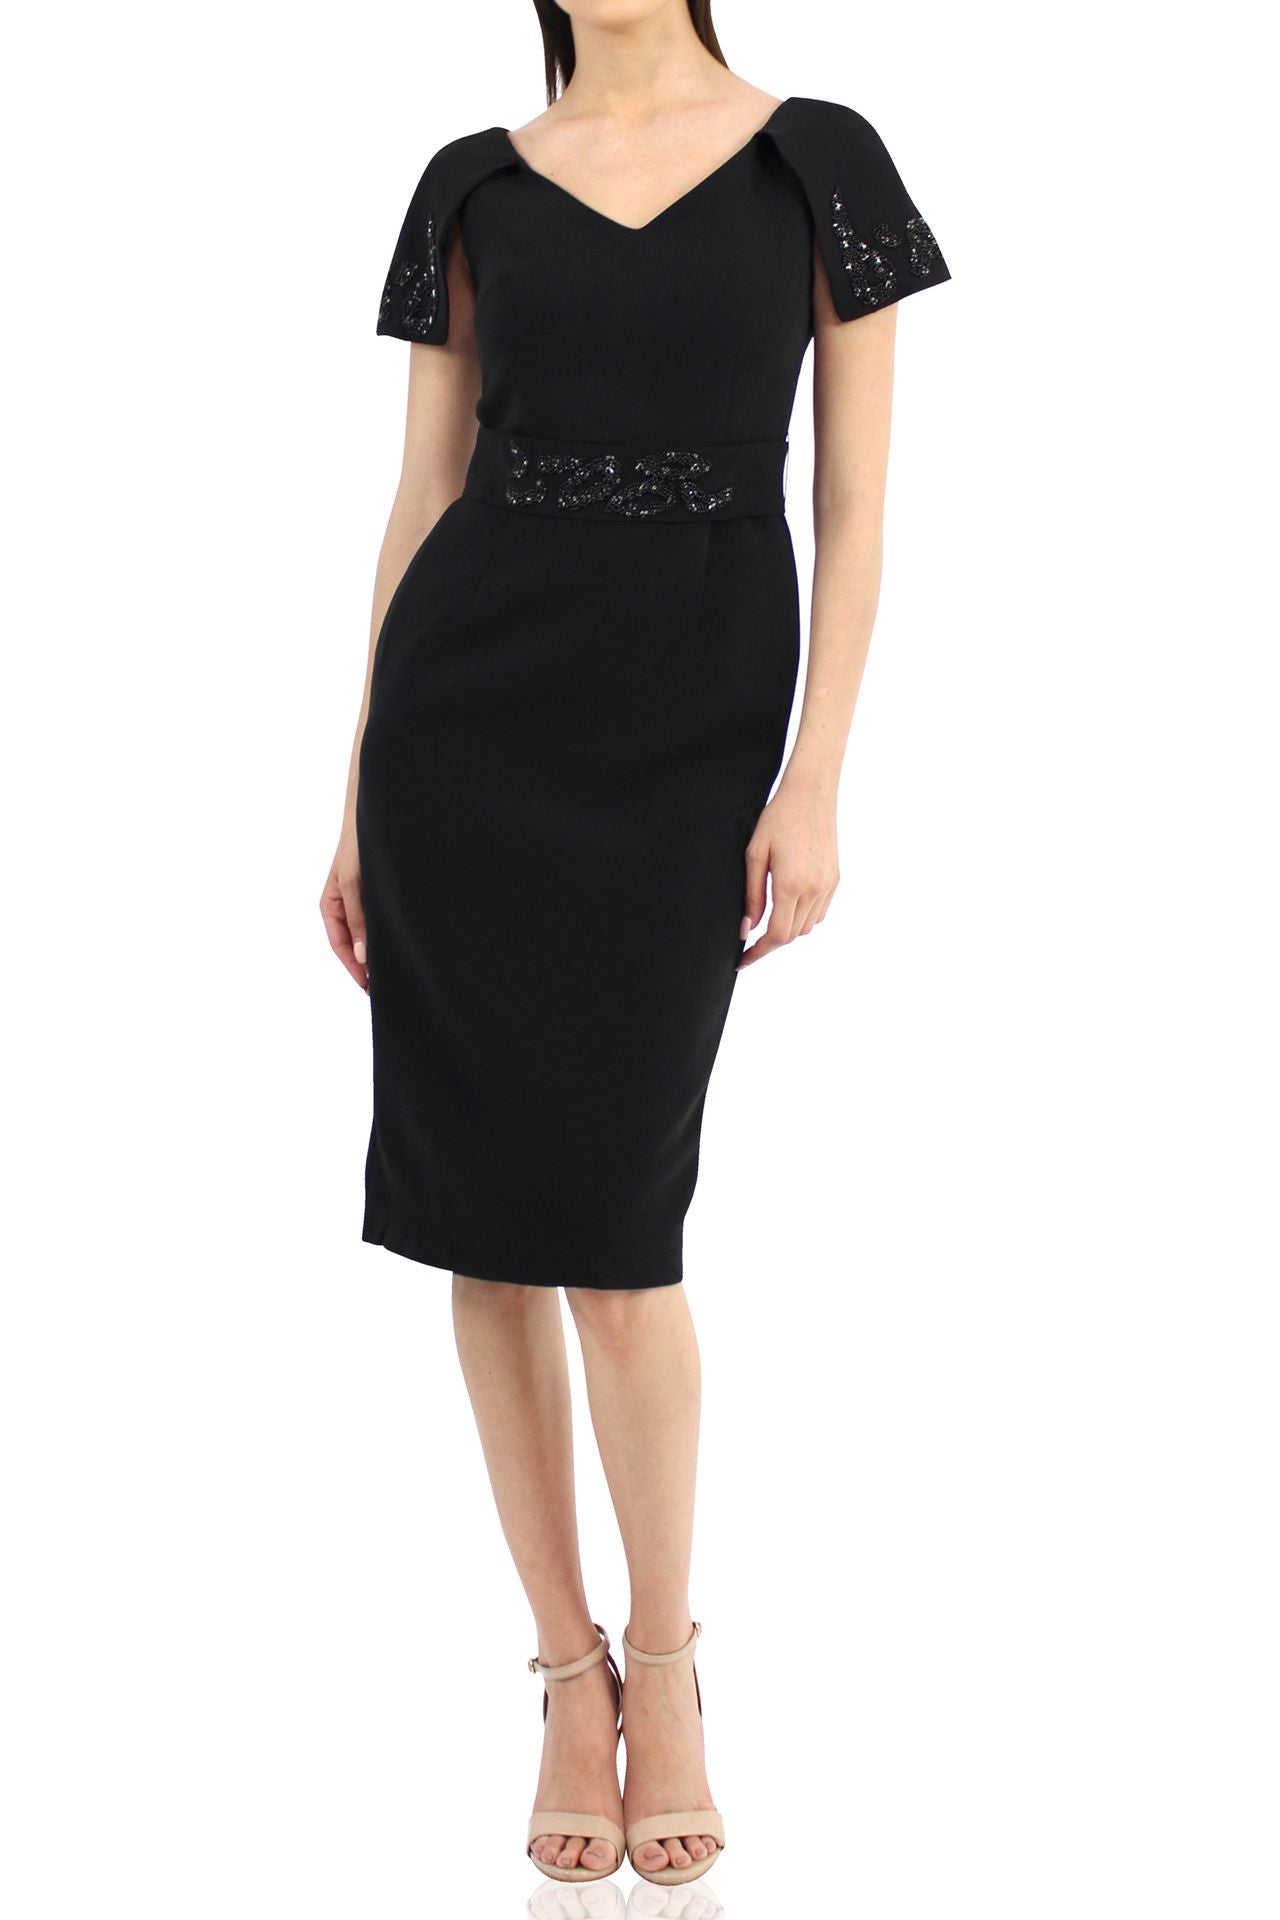 "embellished dress" "Kyle X Shahida" "black dress for women midi" "black midi sexy dress"